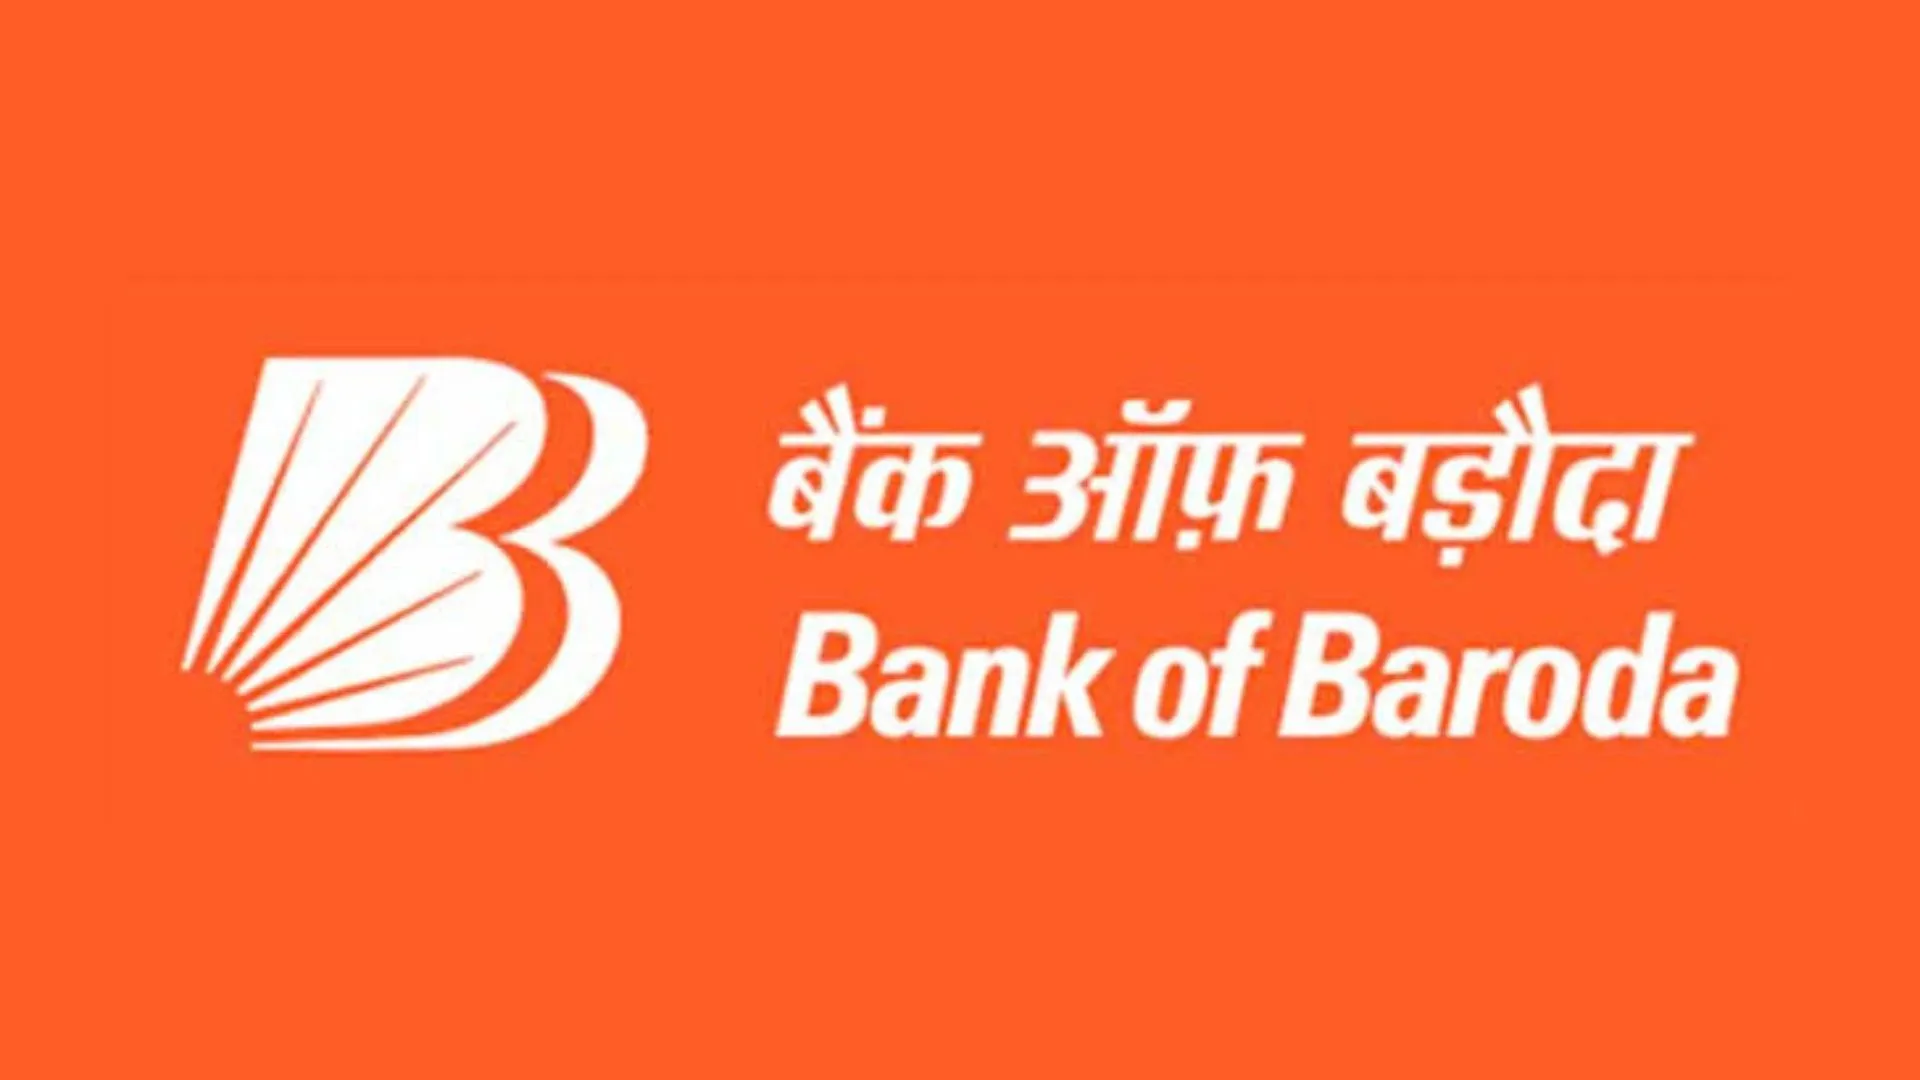 Bank of Baroda Logo PNG | VECTOR - FREE Vector Design - Cdr, Ai, EPS, PNG,  SVG